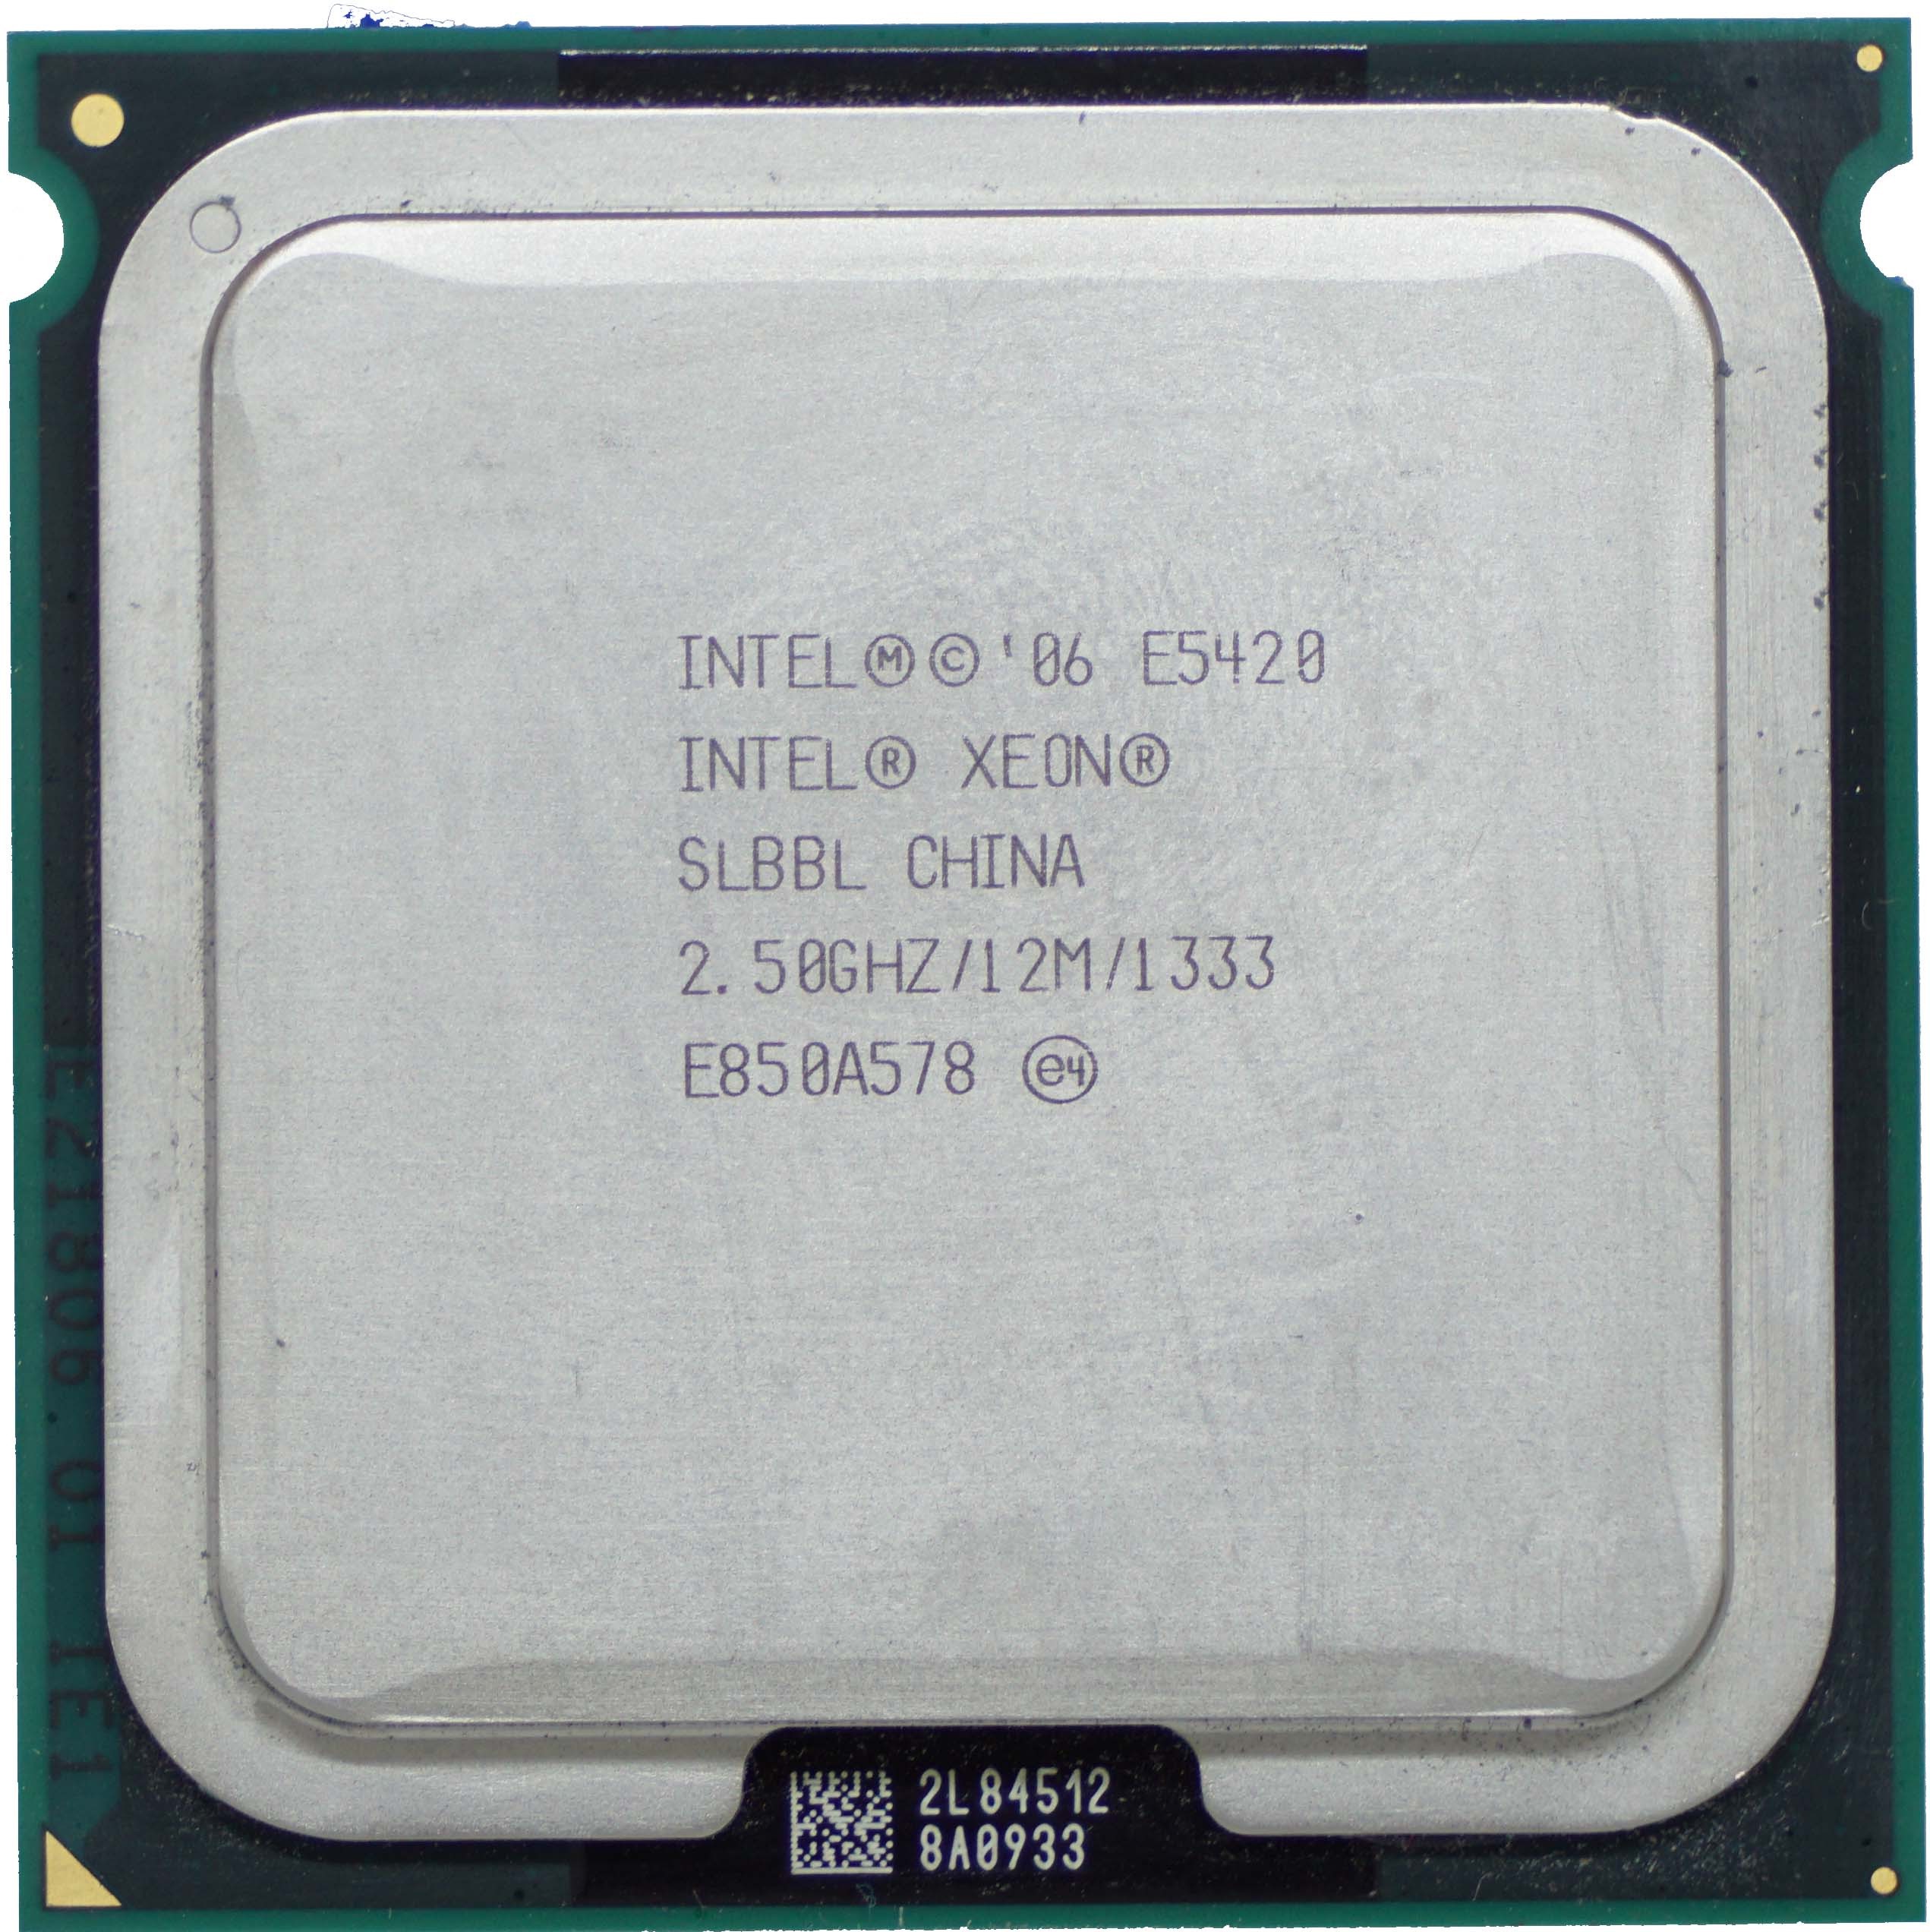 hp xw6600 Workstation Xeon E5420 2.5GHz 4GB 500GB(HDD) Quadro FX570 DVD -RW WindowsXP Pro 32bit - 3